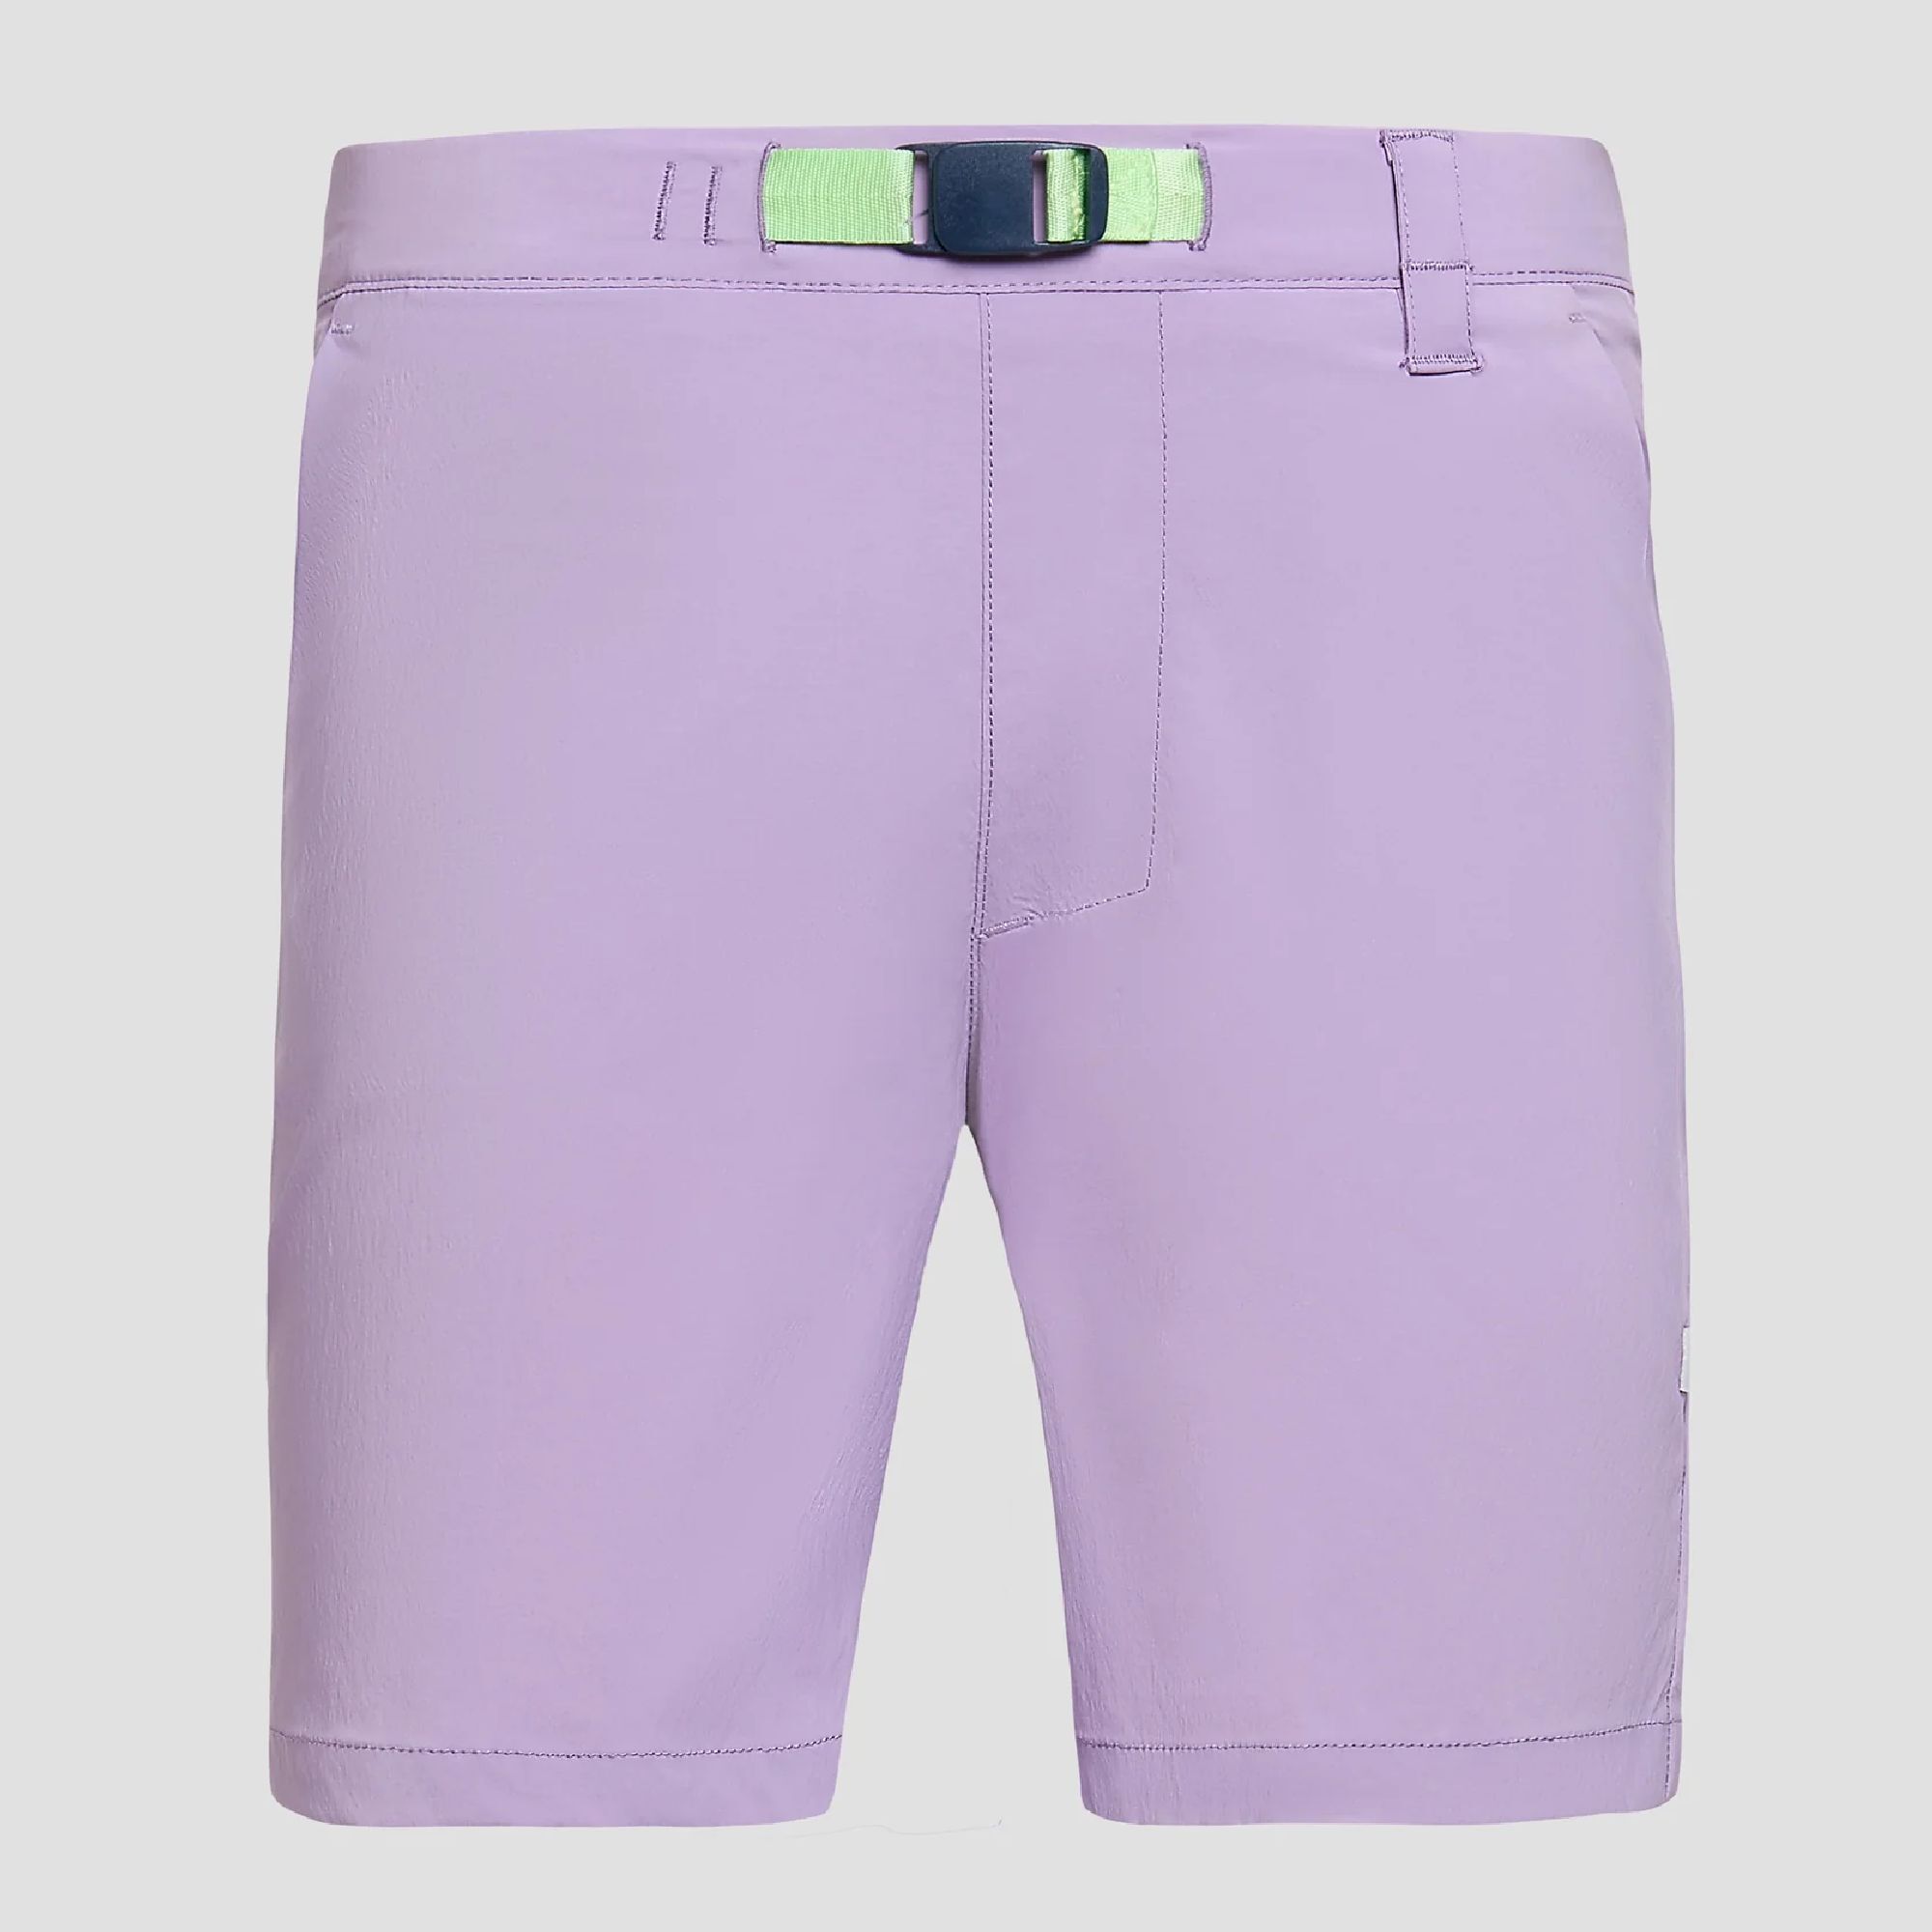 Namuk Linn Everyday Outdoor Shorts - Shorts - Kind | Hardloop